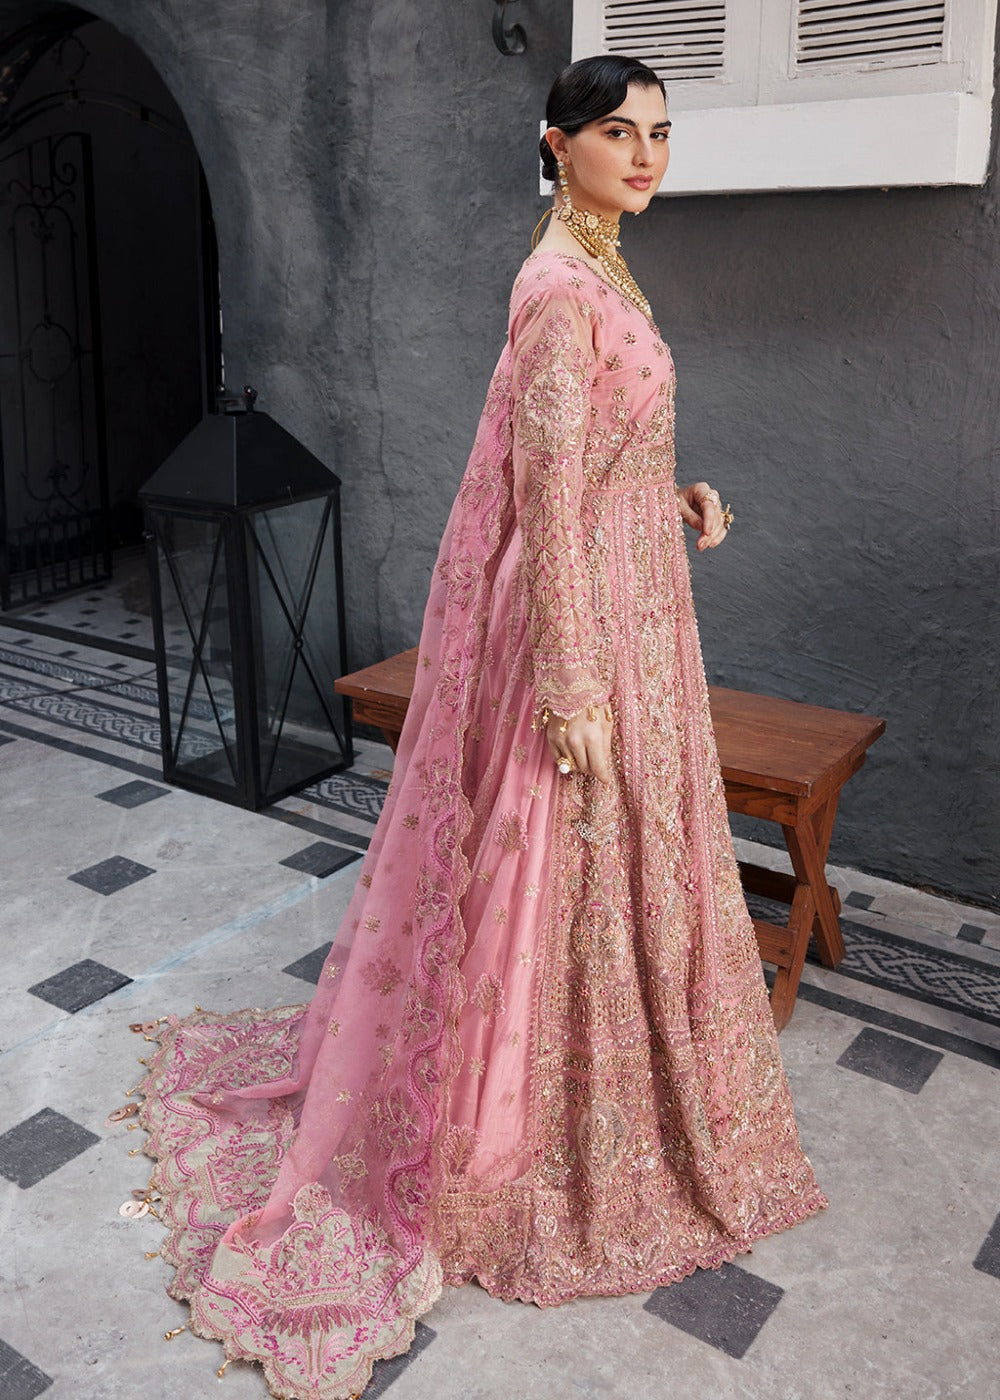 Buy Now Nawabzadi Wedding Formals 2023 by Emaan Adeel - NW-04 Online in USA, UK, Canada & Worldwide at Empress Clothing. 